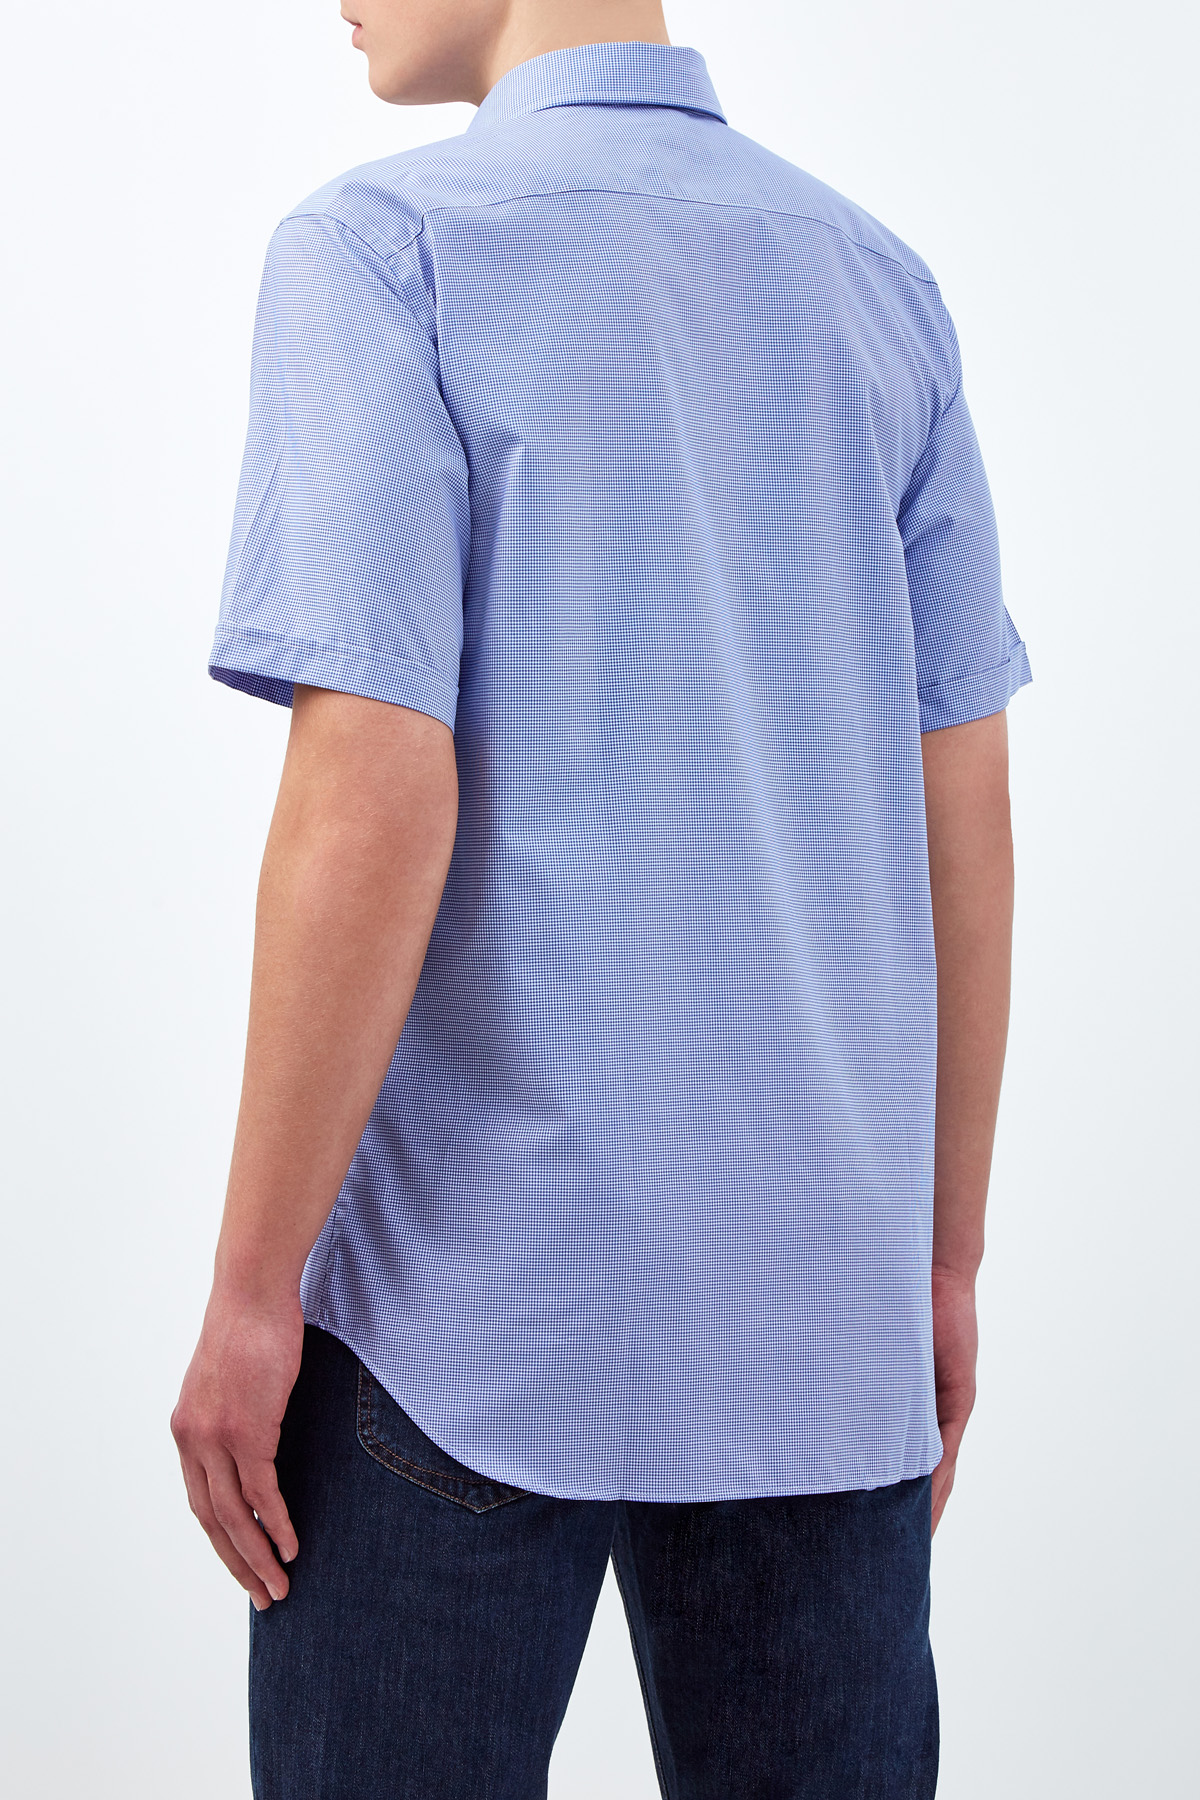 Рубашка с микро-принтом в клетку виши из хлопка Impeccabile CANALI, цвет синий, размер 58;60 - фото 4